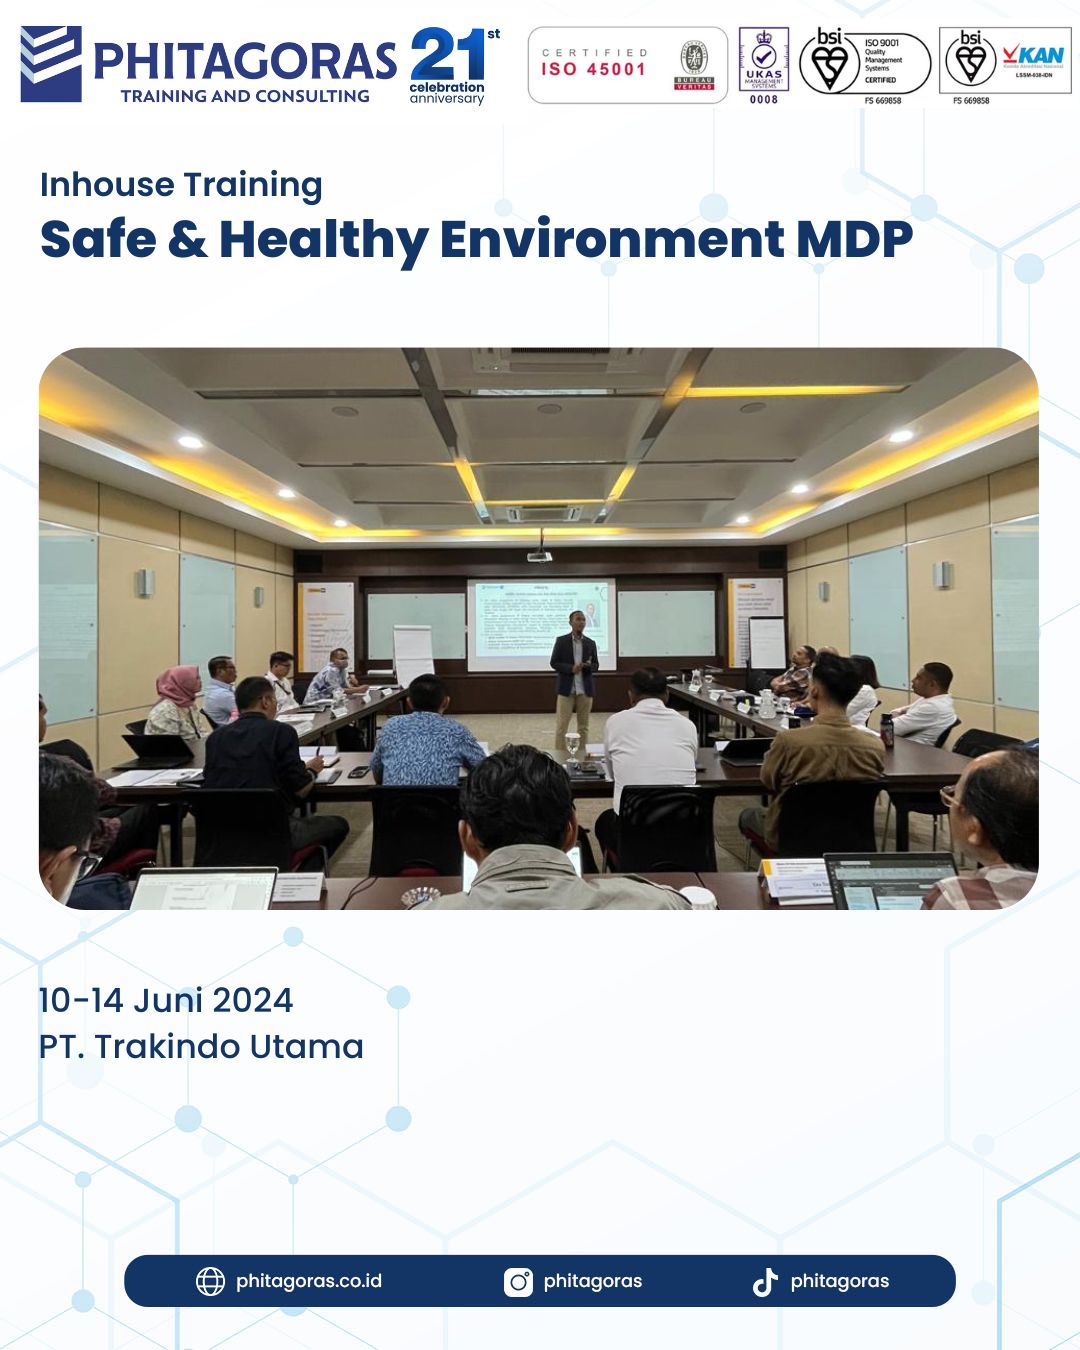 Inhouse Training Safe & Healthy Environment MDP - PT. Trakindo Utama 10-14 Juni 2024